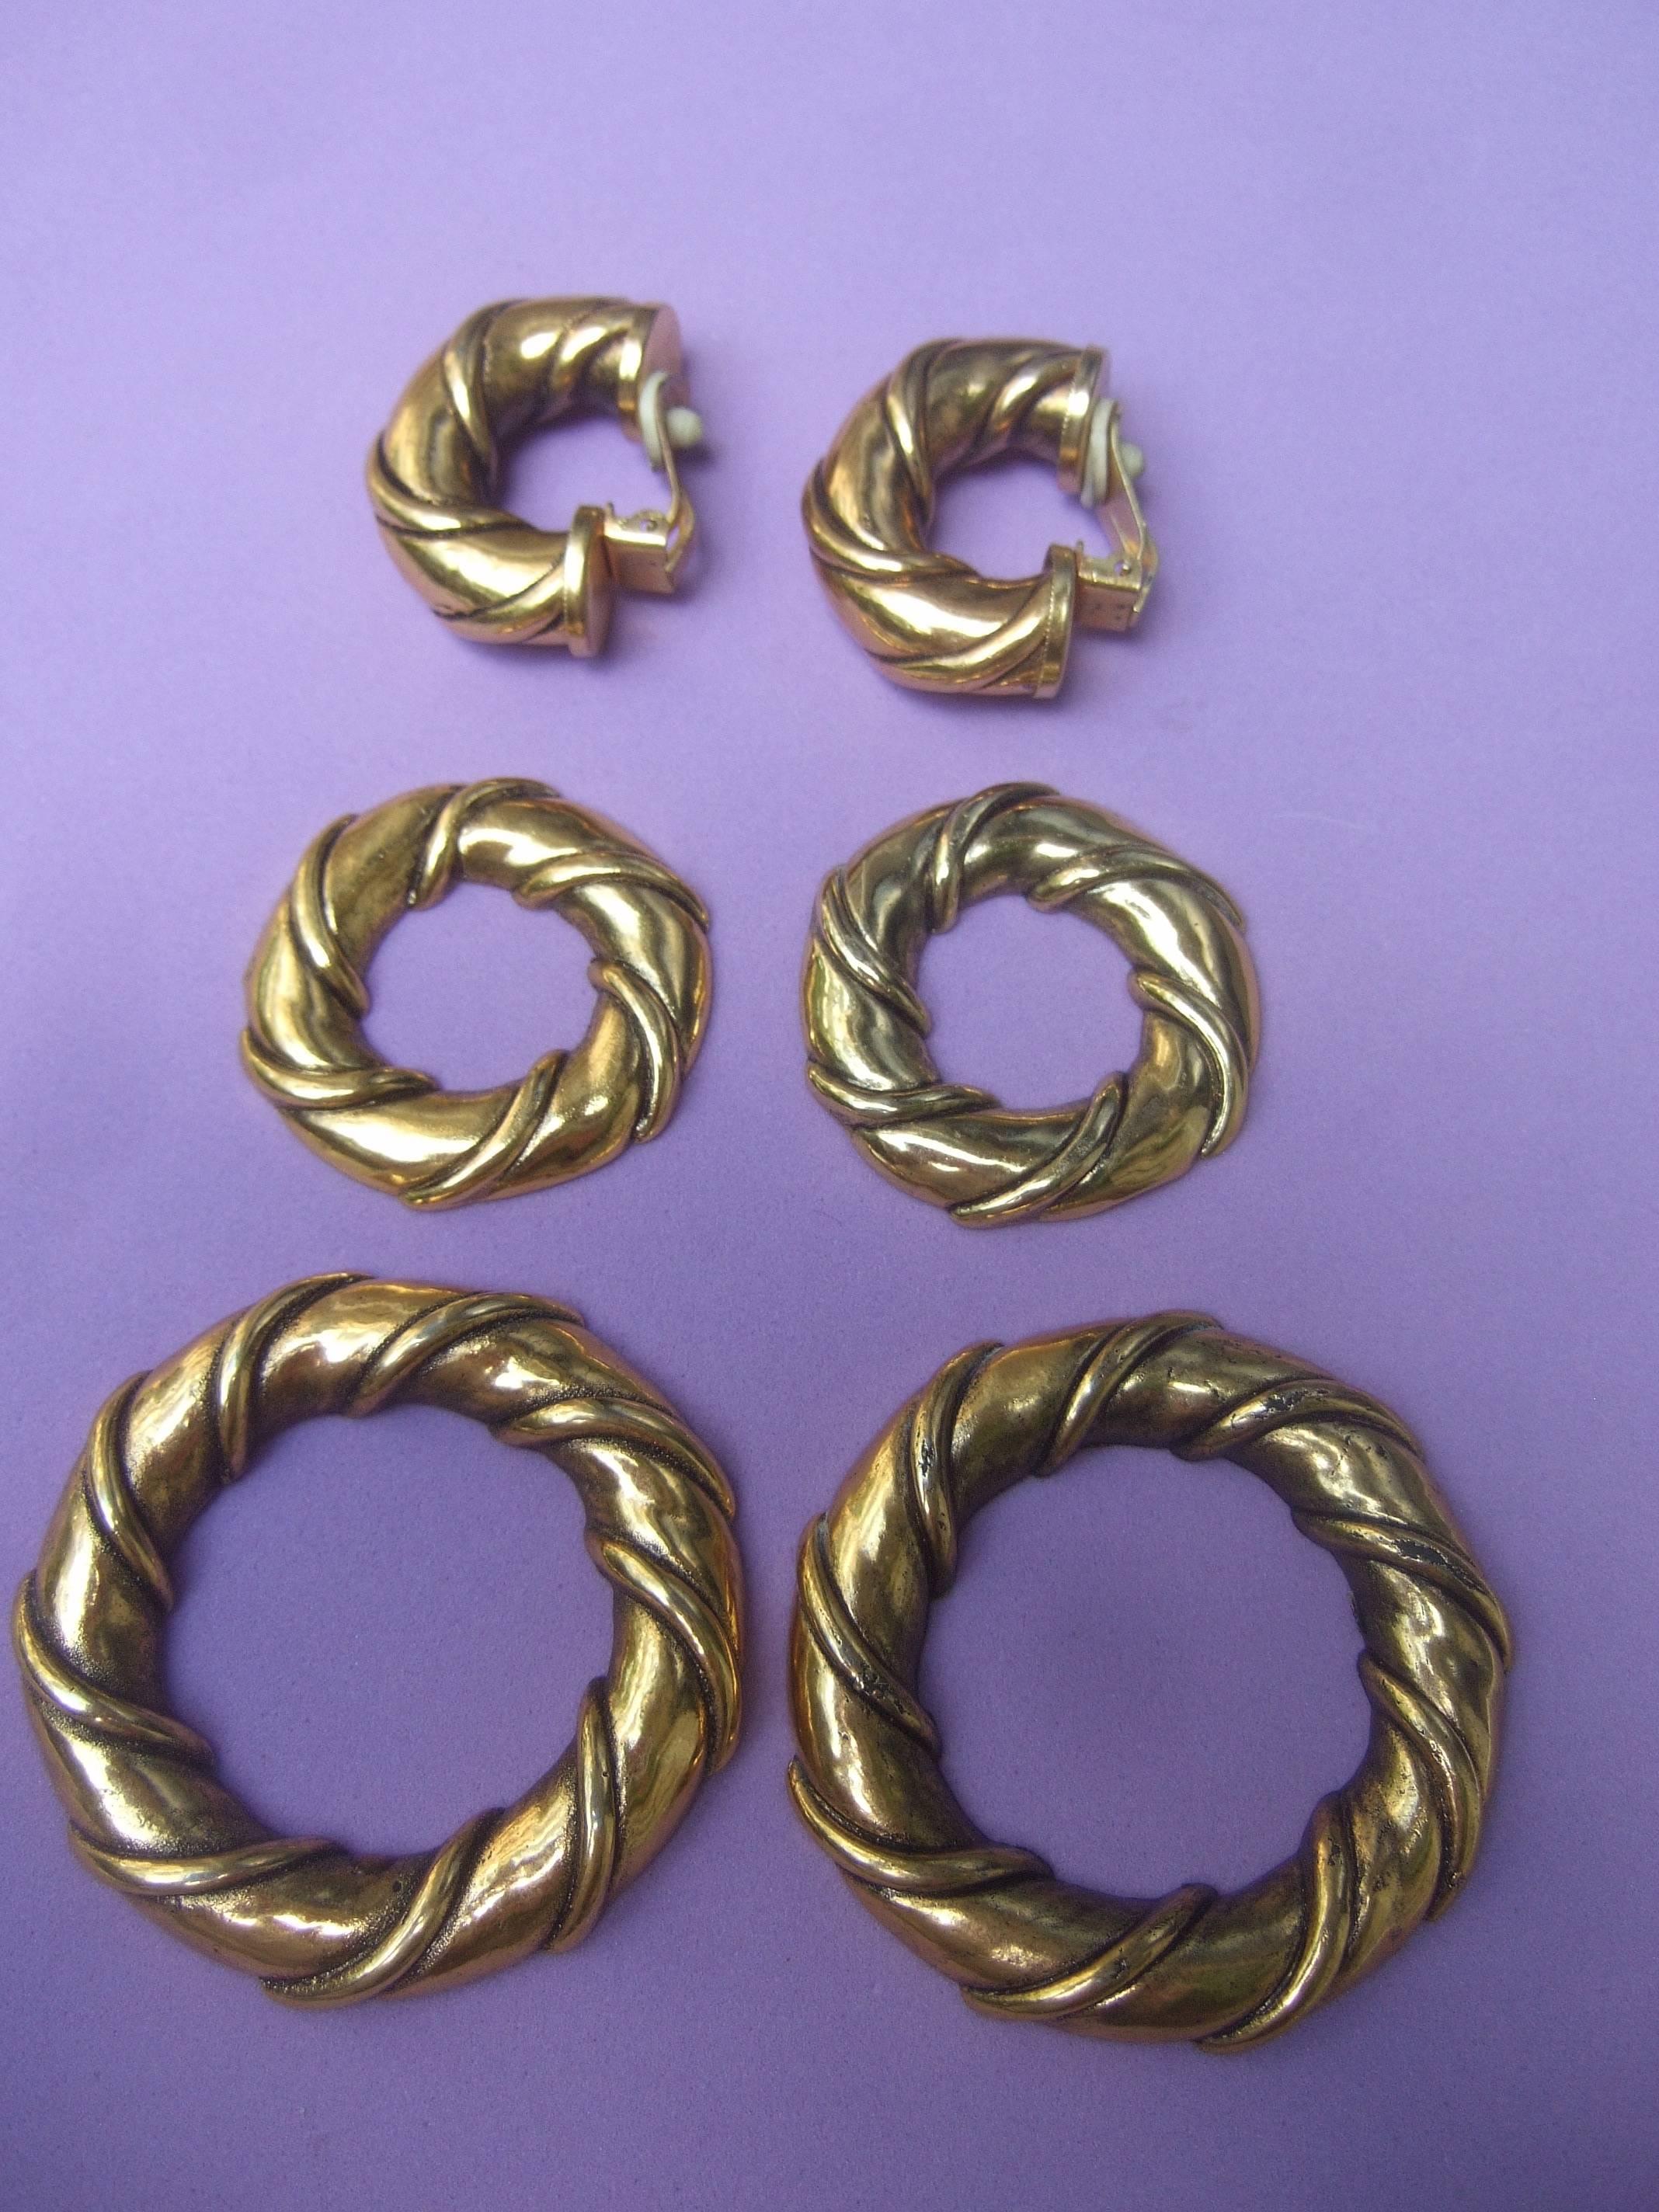  Gilt Metal Interchangeable Hoop Earrings by Une Ligne Paris  For Sale 1